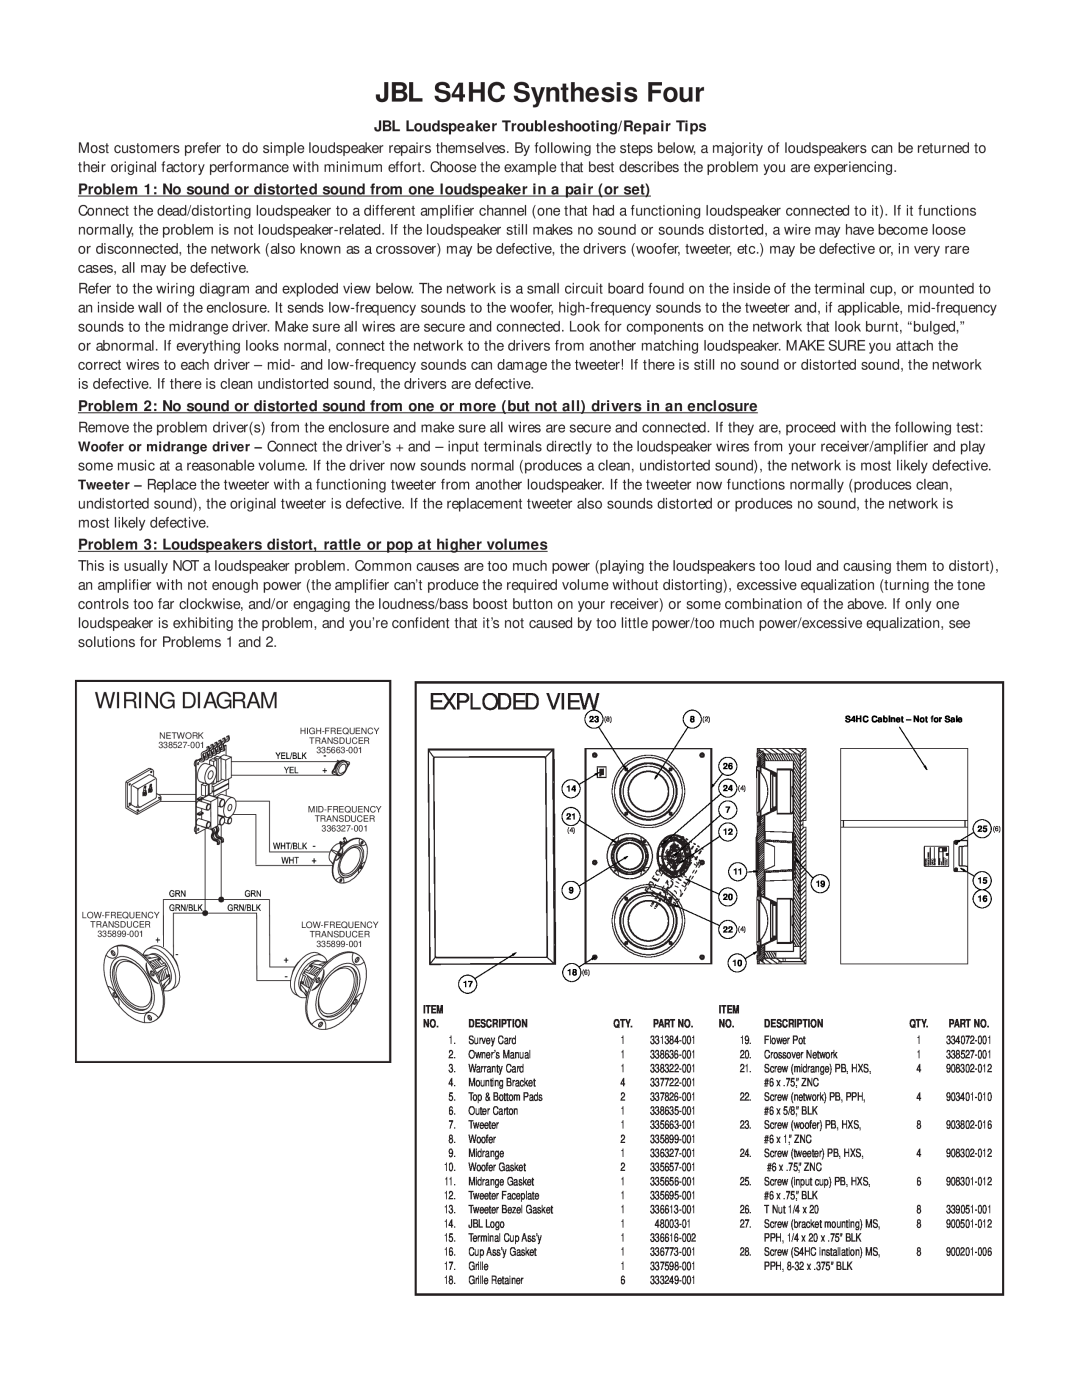 JBL owner manual JBL S4HC Synthesis Four, Exploded View, Wiring Diagram, JBL Loudspeaker Troubleshooting/Repair Tips 